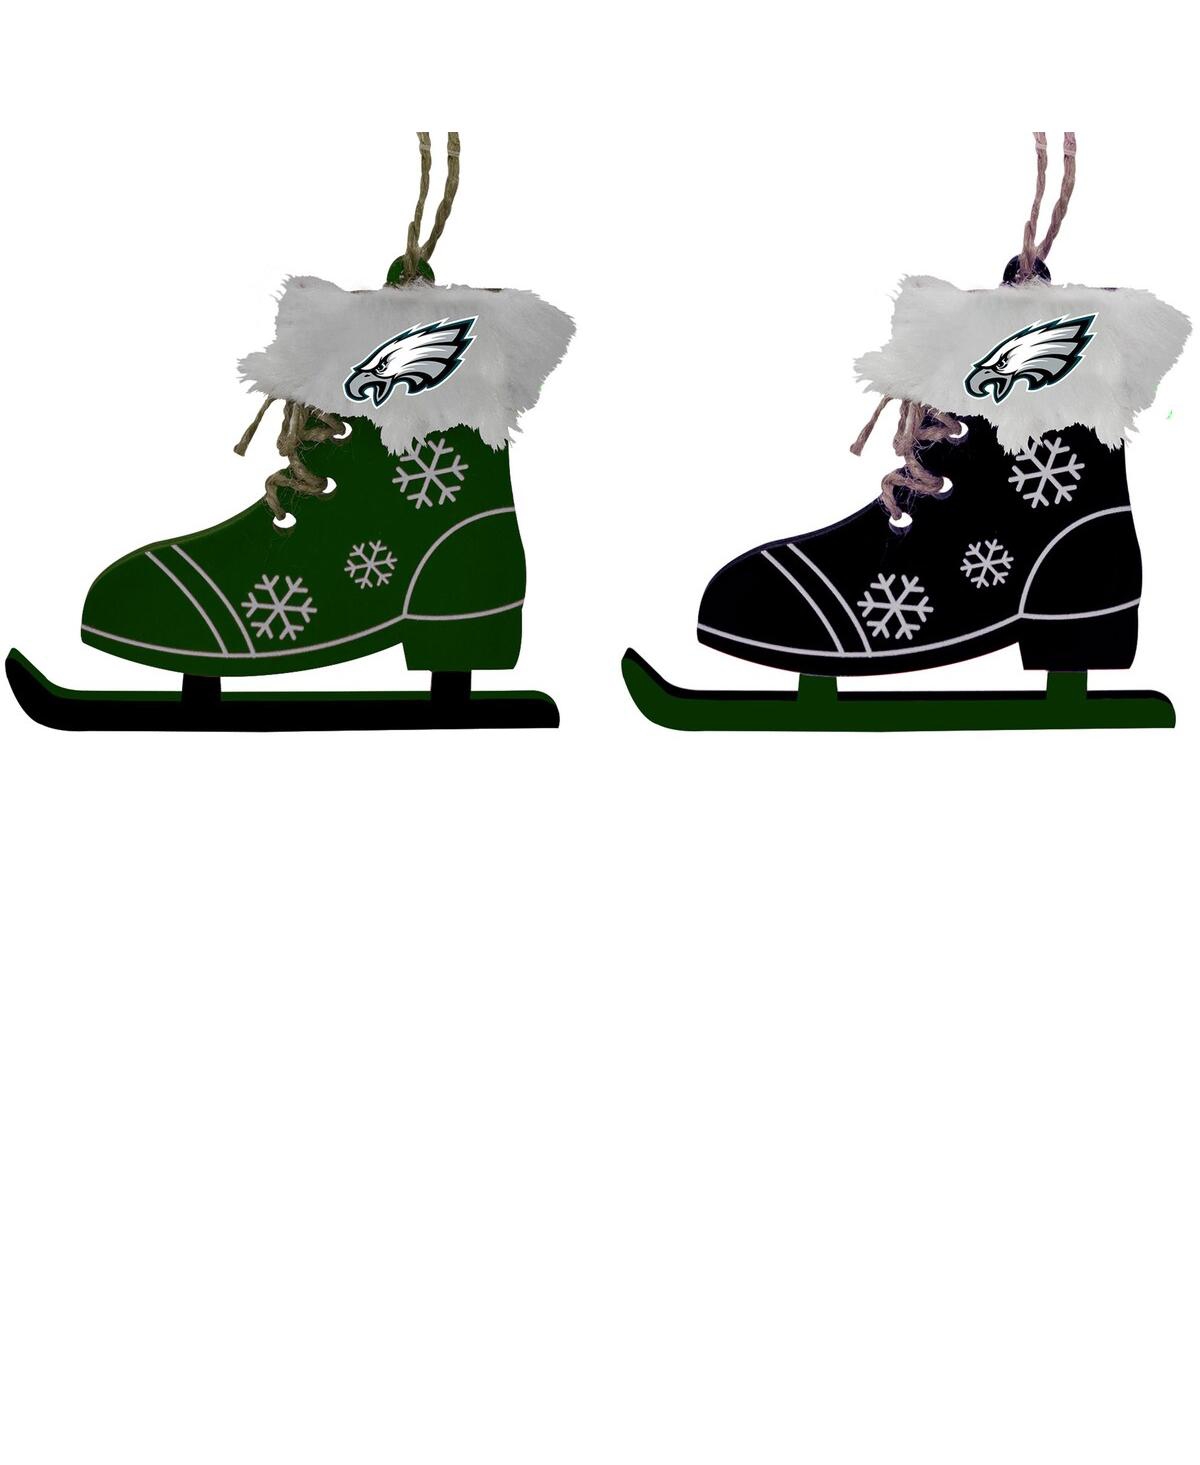 Memory Company The  Philadelphia Eagles Two-pack Ice Skate Ornament Set In Green,black